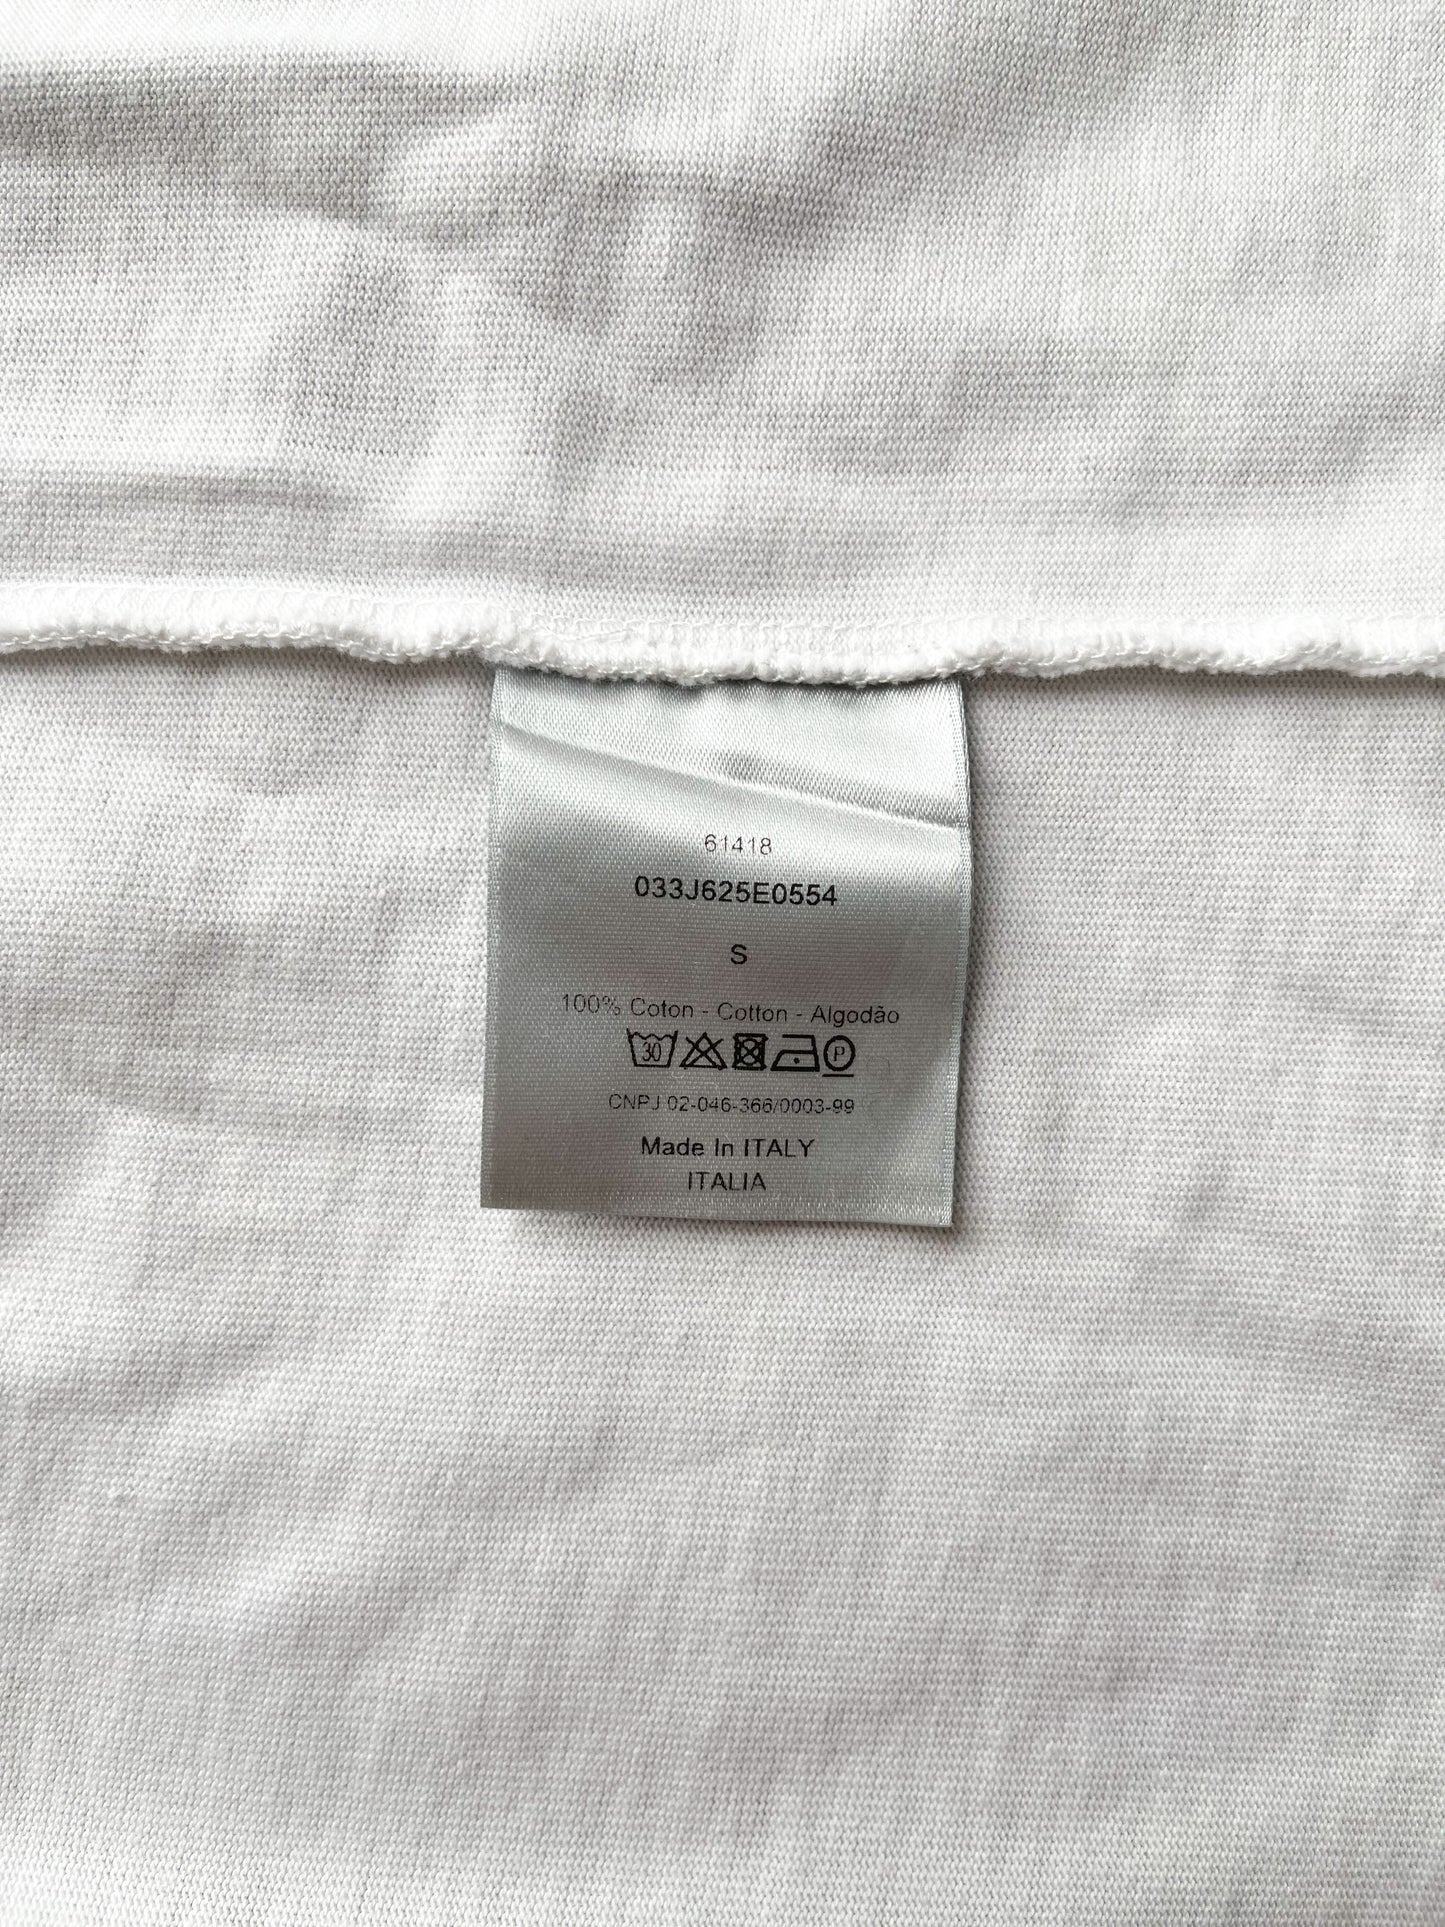 Dior Kenny Scharf Logo Tee